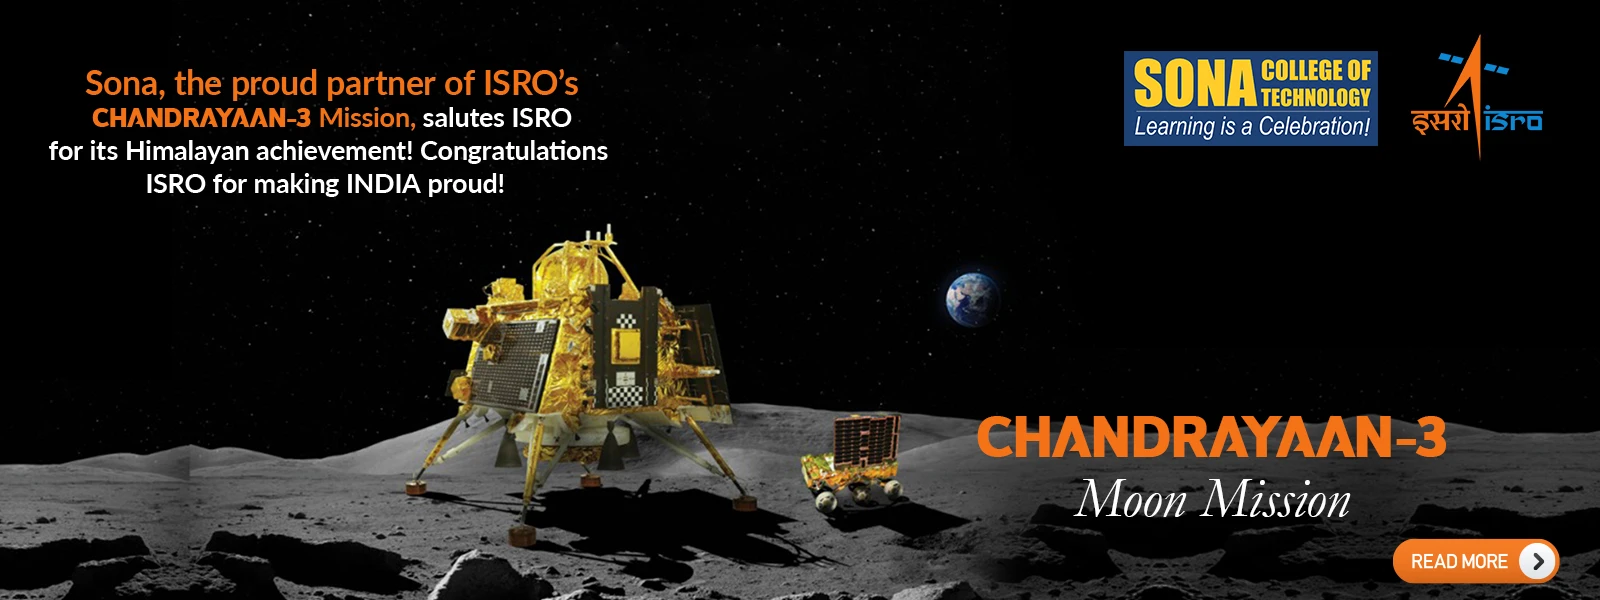 Chandrayaan 3 moon mission